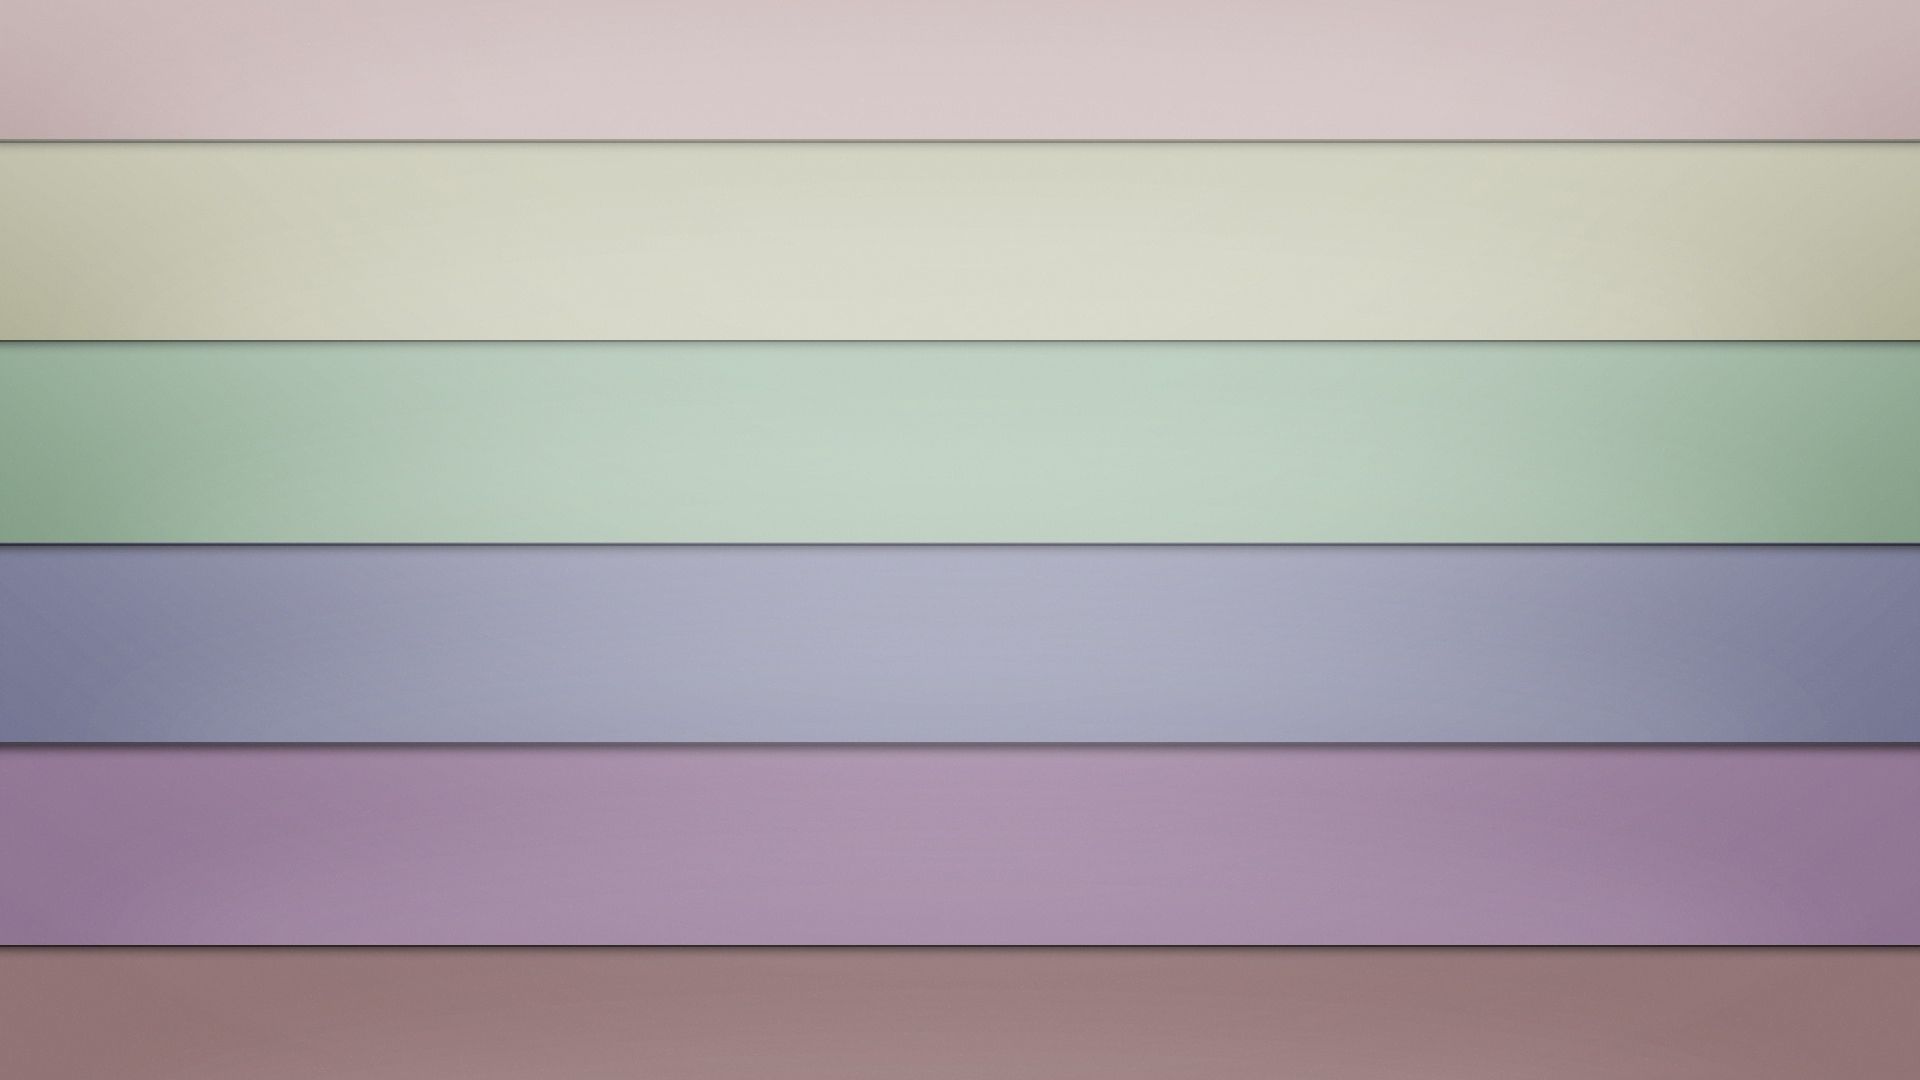 Fondos de pantalla de color pastel - FondosMil